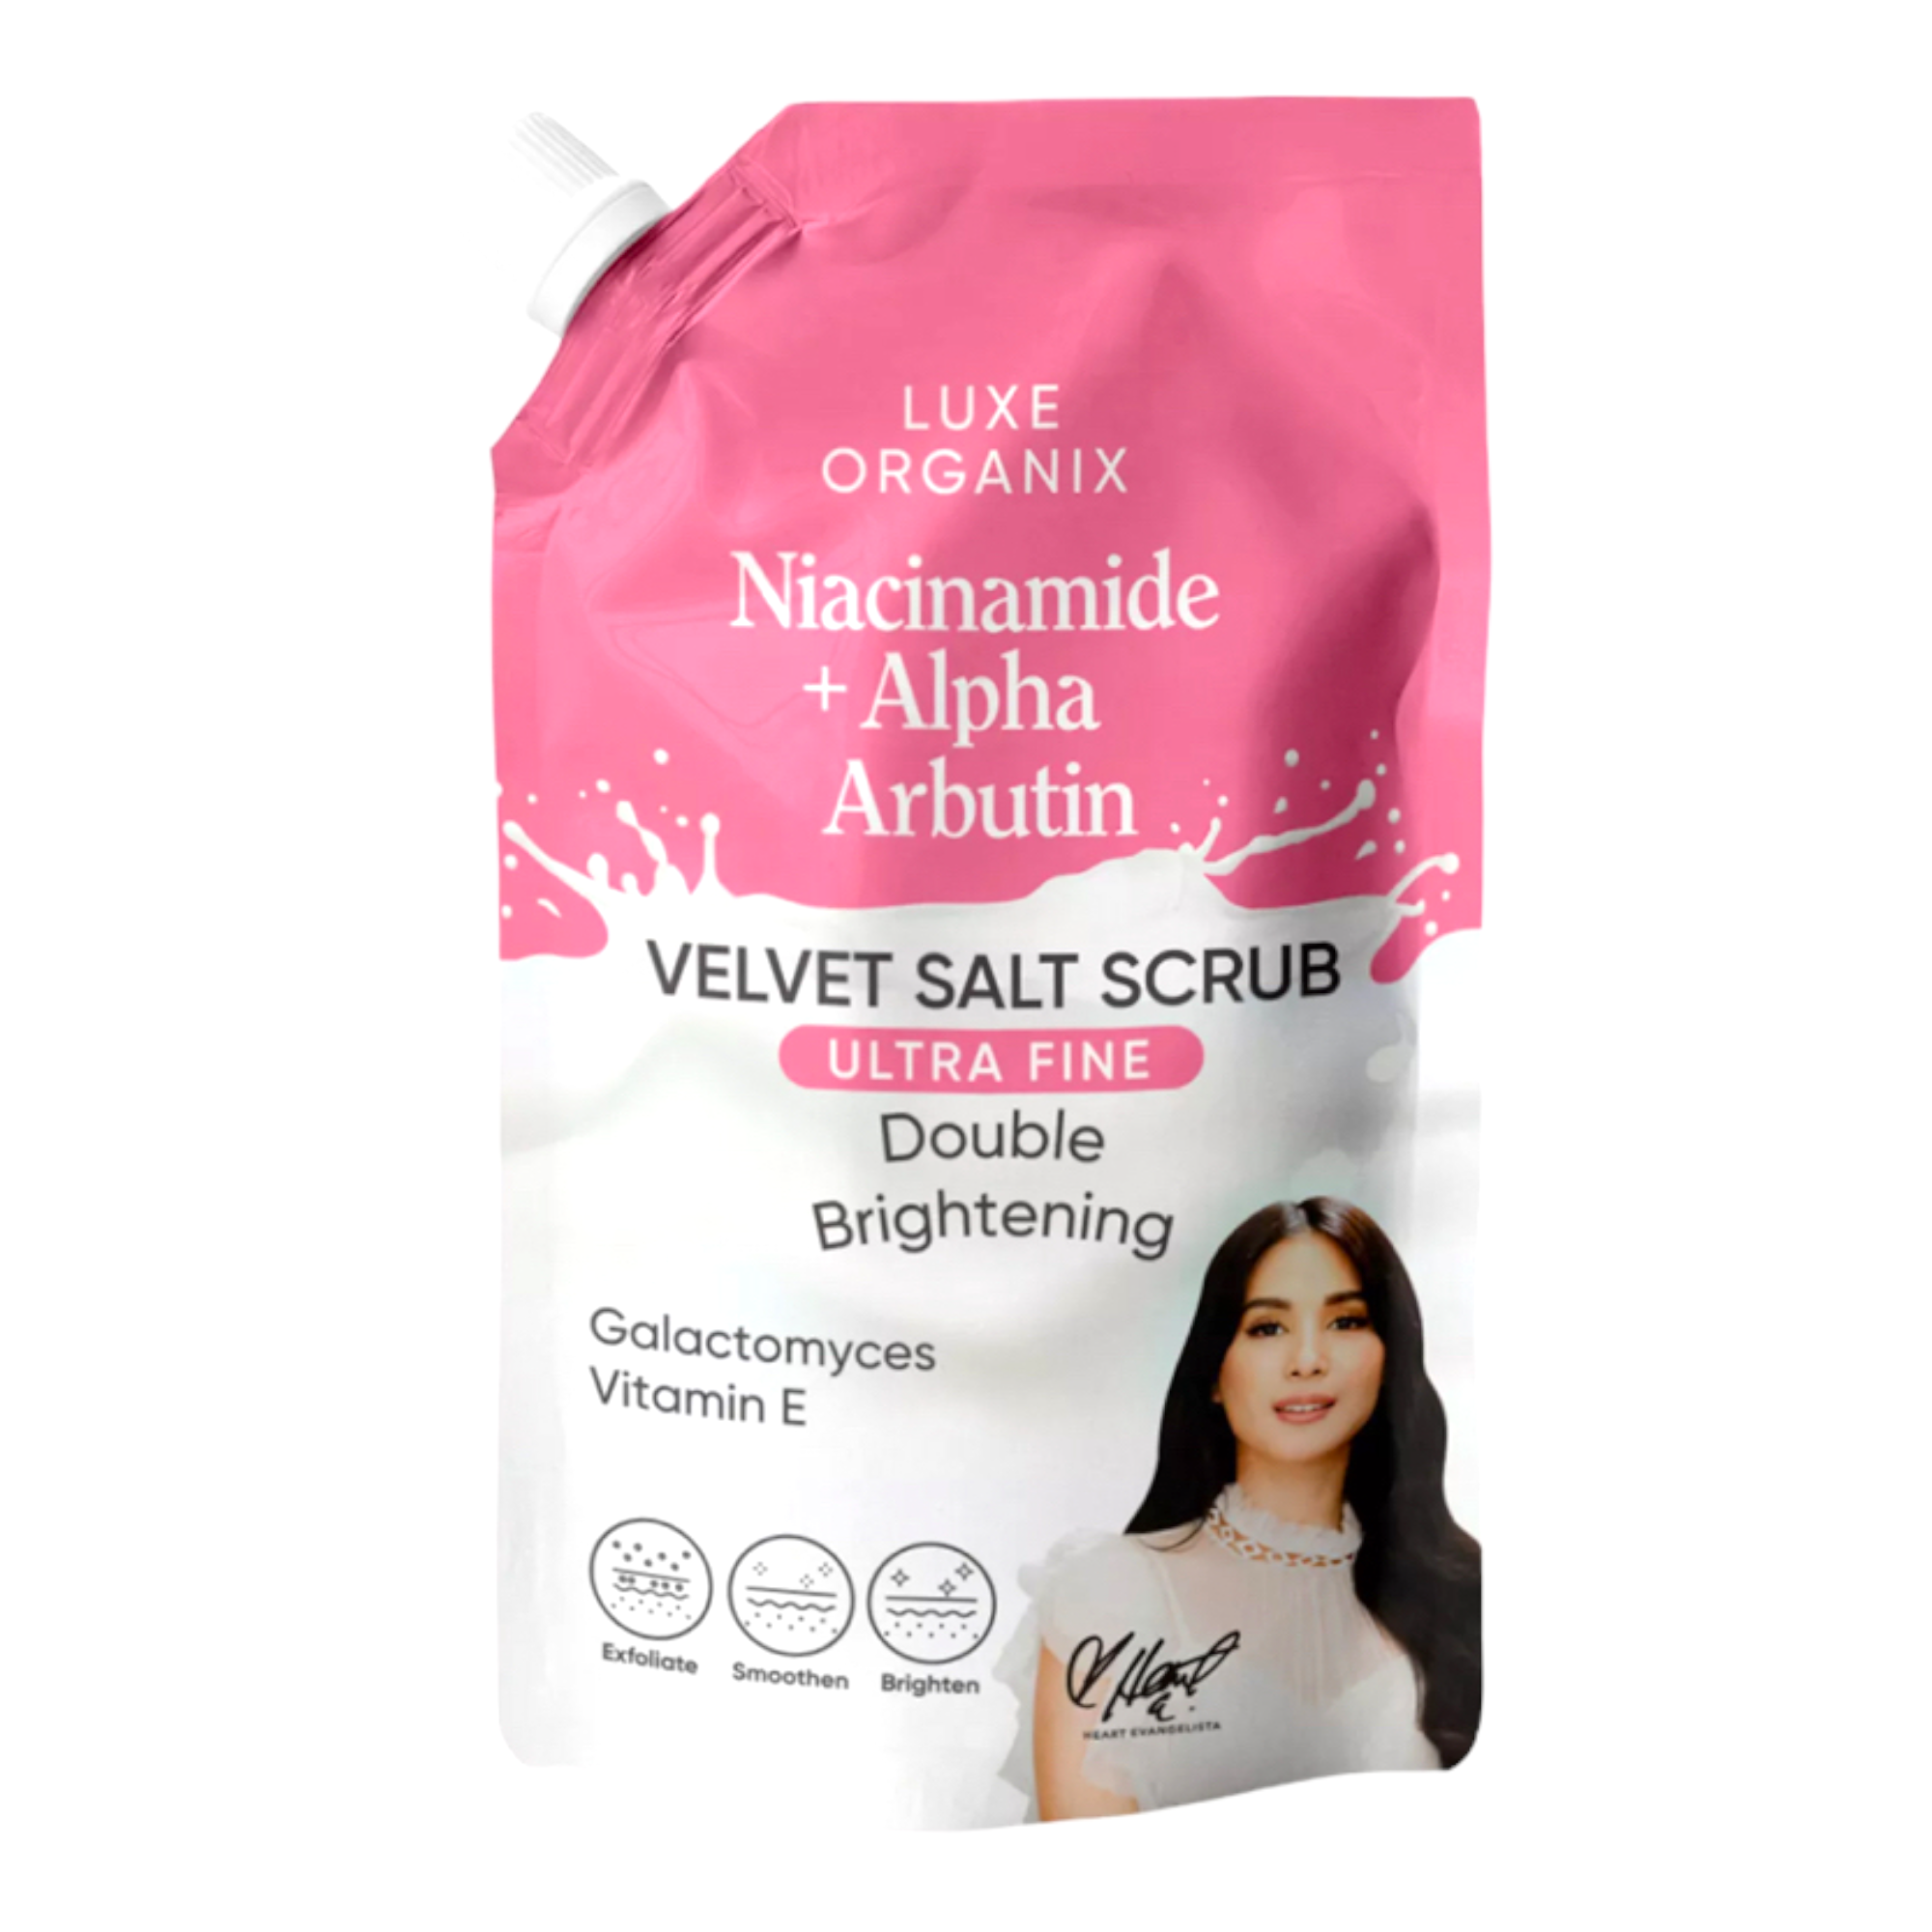 LUXE ORGANIX - Niacinamide + Alpha Arbutin Velvet Salt Scrub Double Brightening  300G - ( PINK )